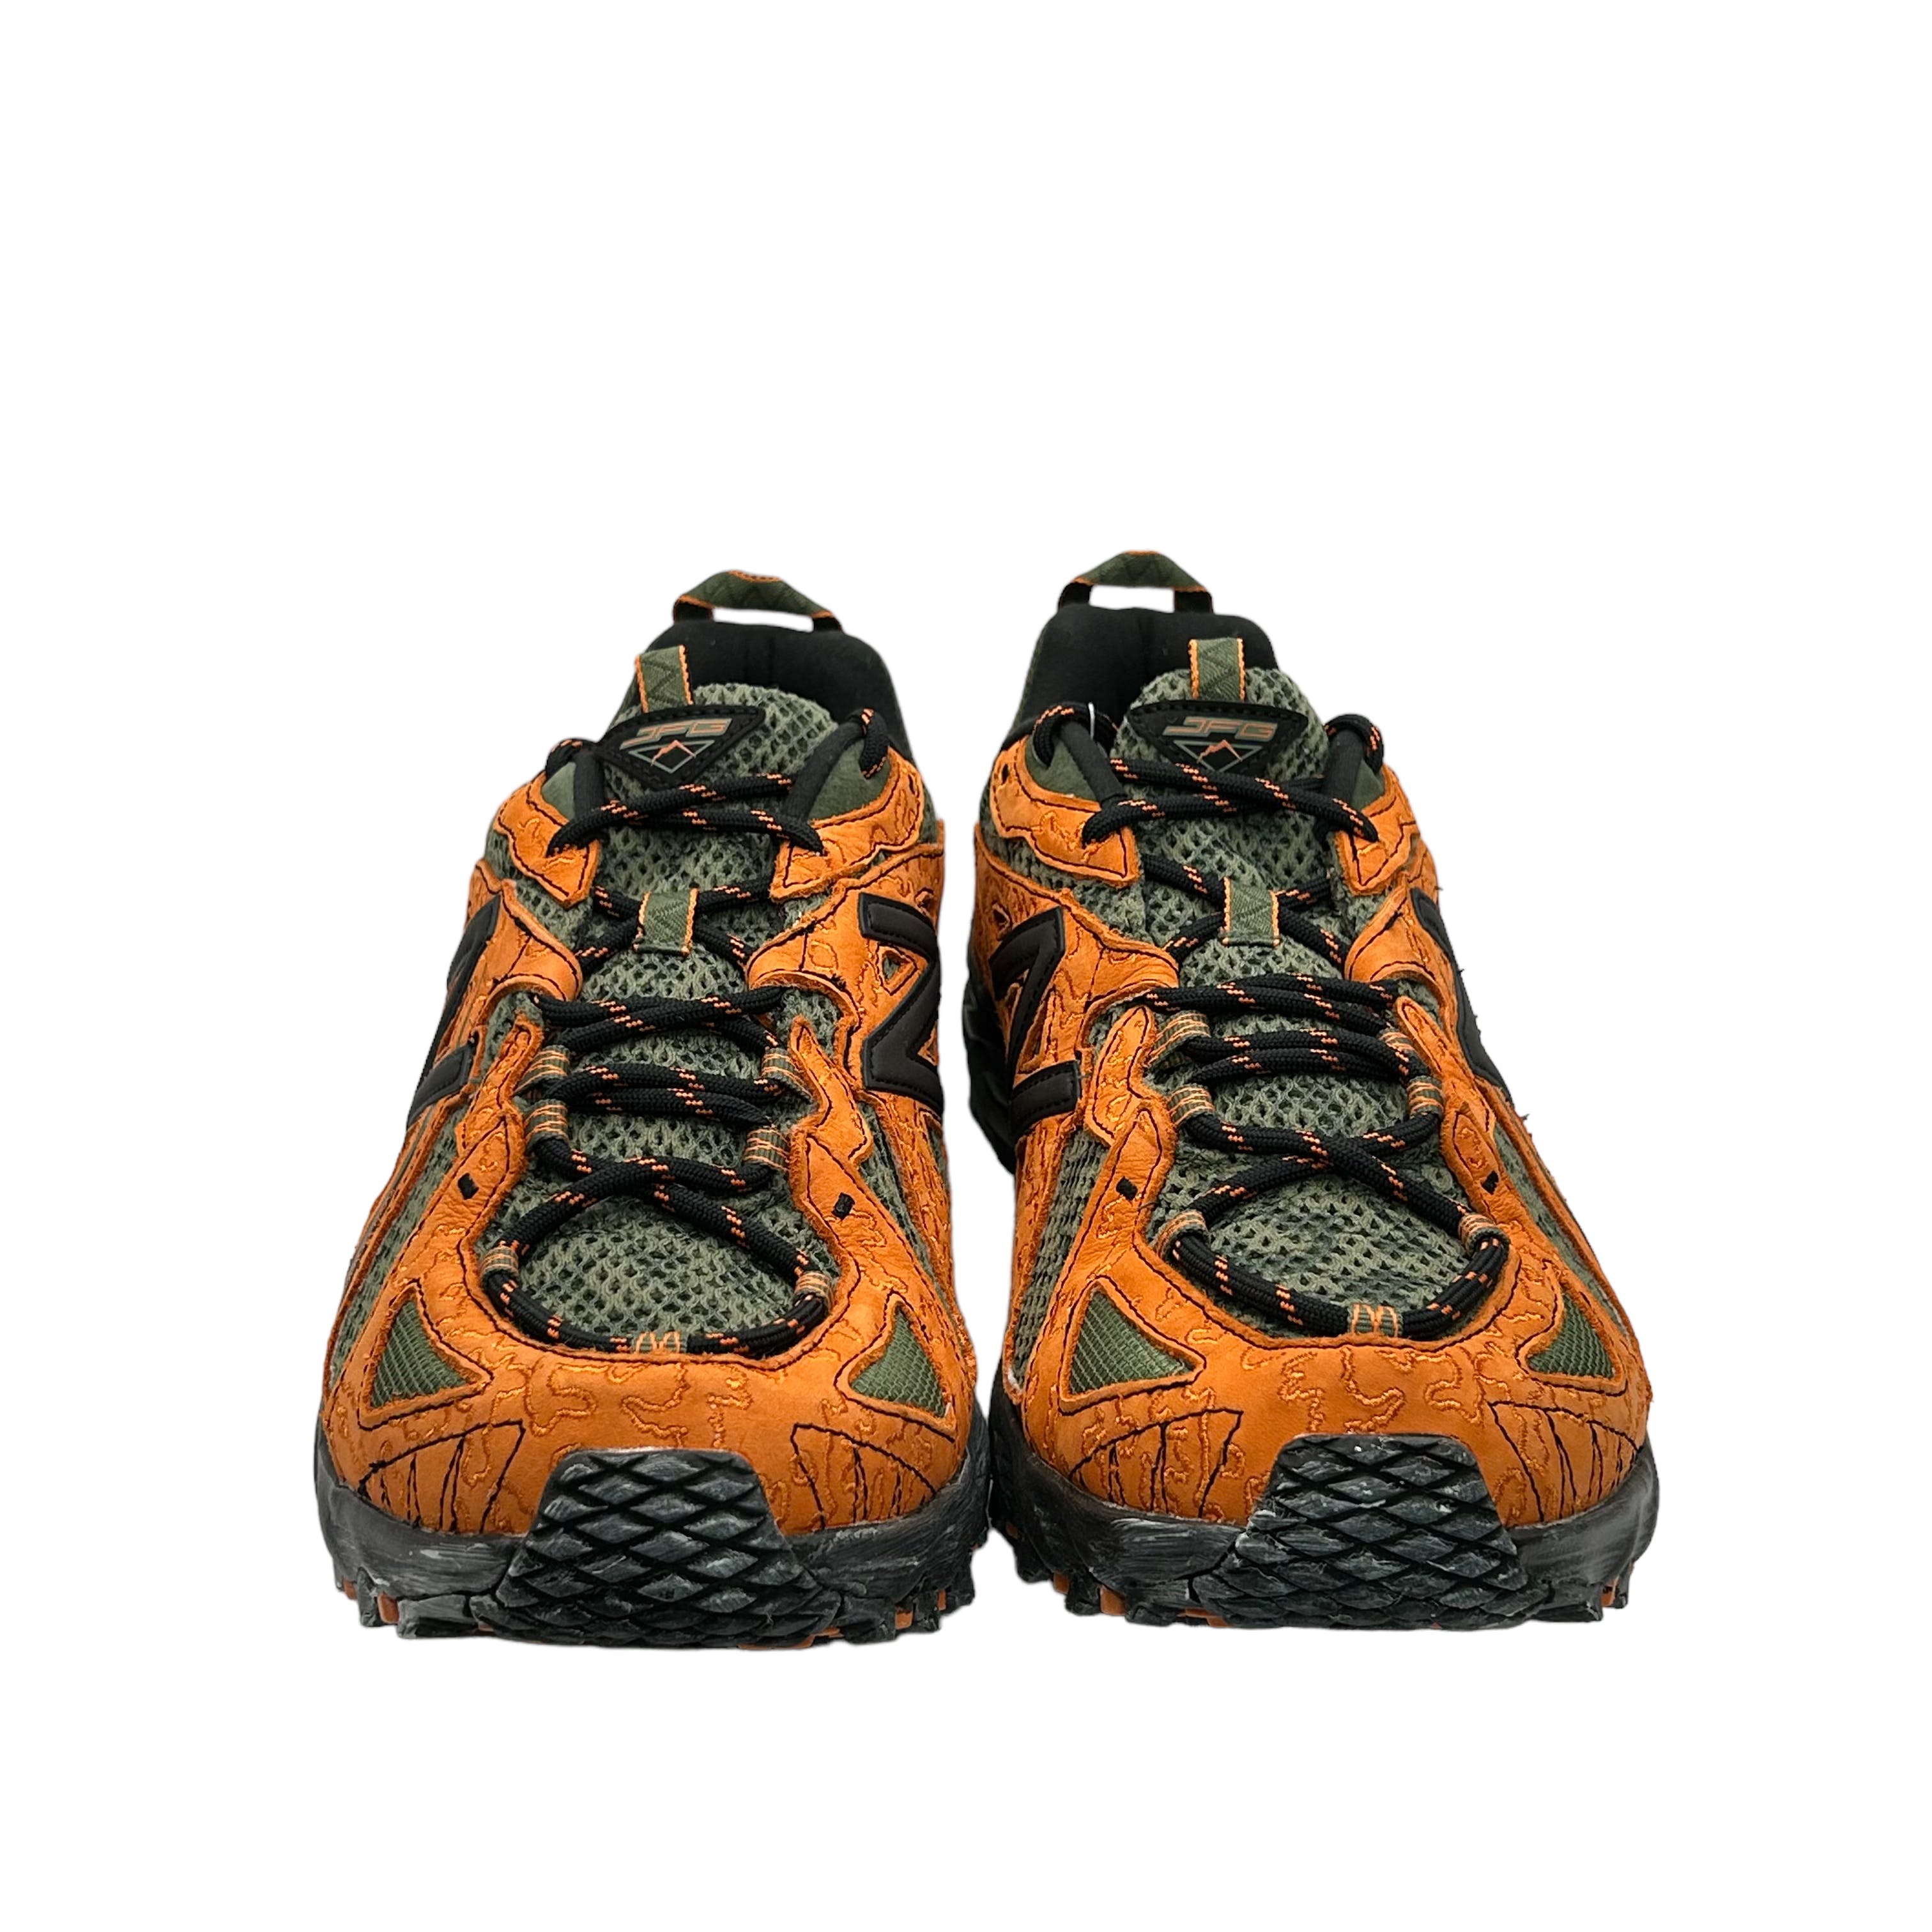 JFG x NB 610 “Lil Swamps” Hiking Shoe - 9